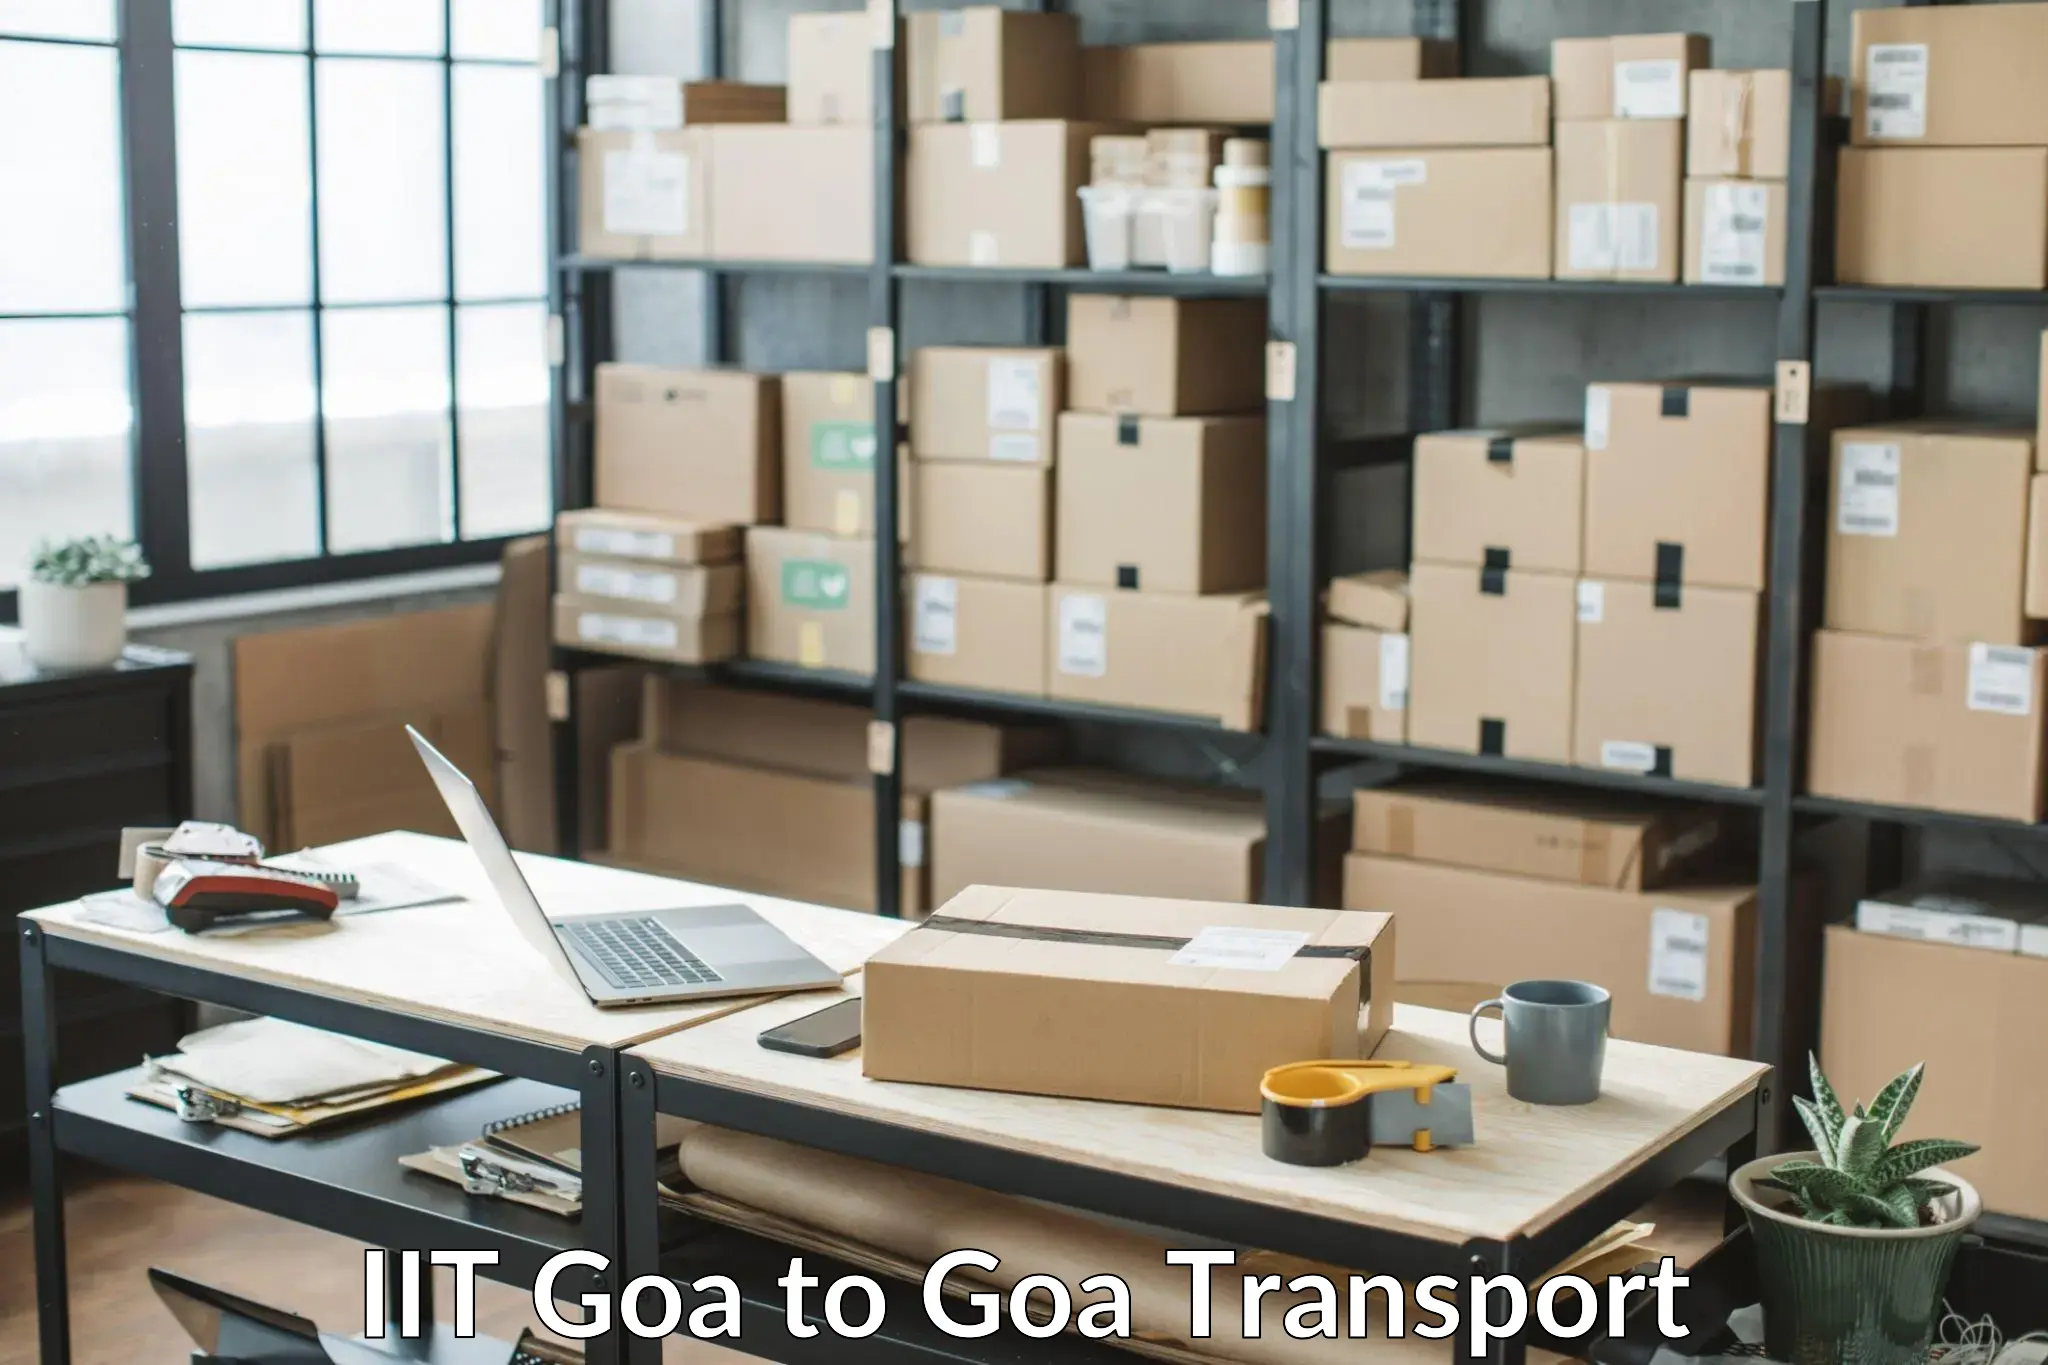 Delivery service IIT Goa to Goa